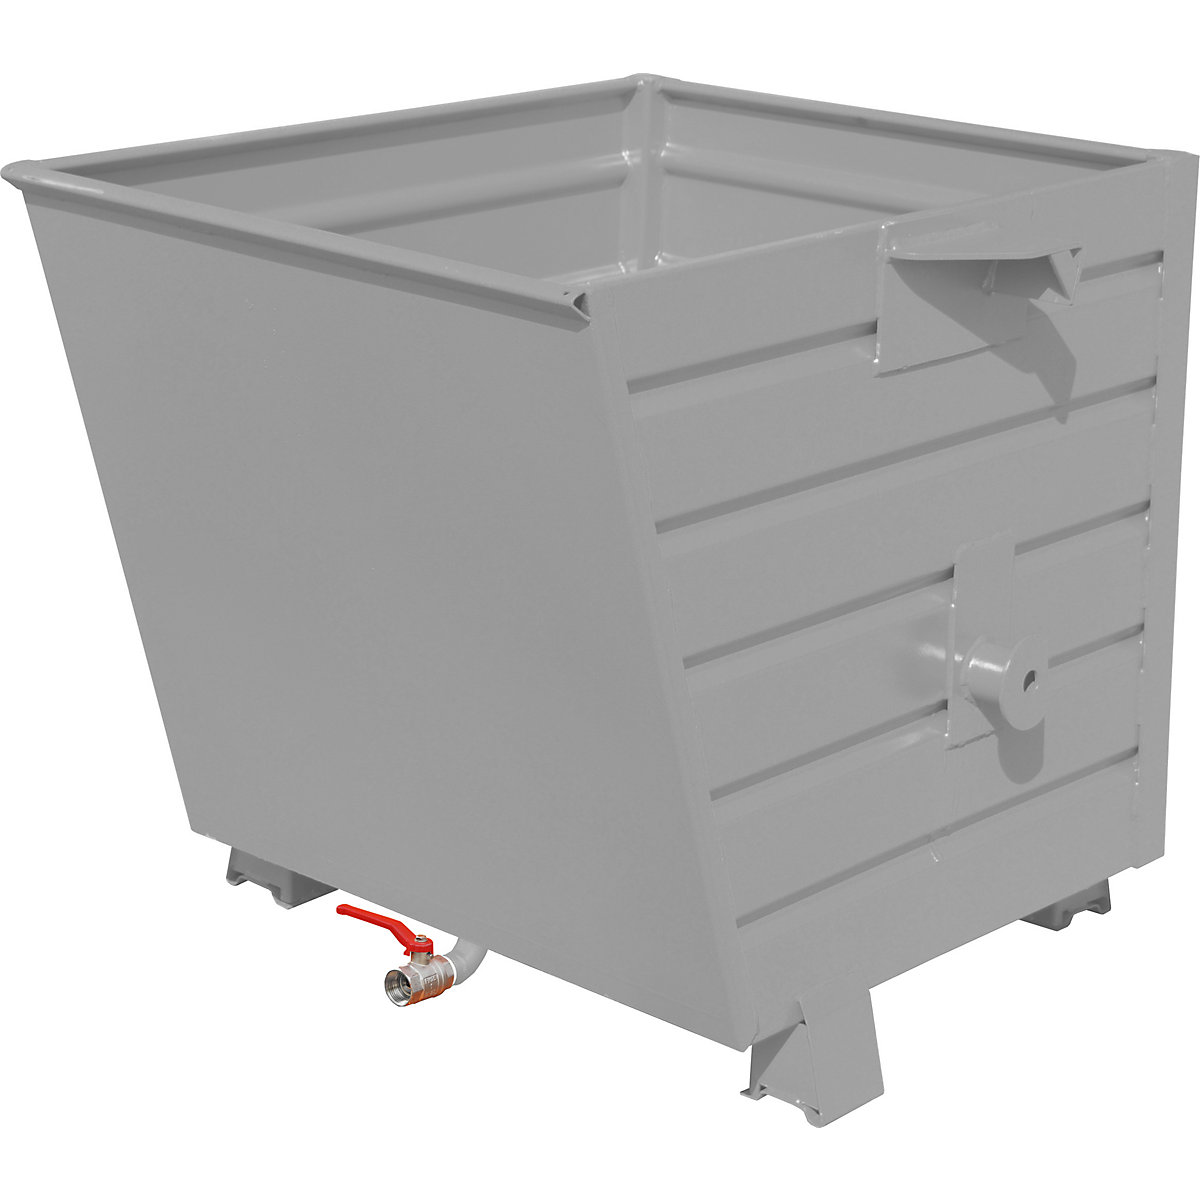 EUROKRAFTpro – Container basculant și stivuibil pentru șpan BSS, volum 0,55 m³, gri șobolan